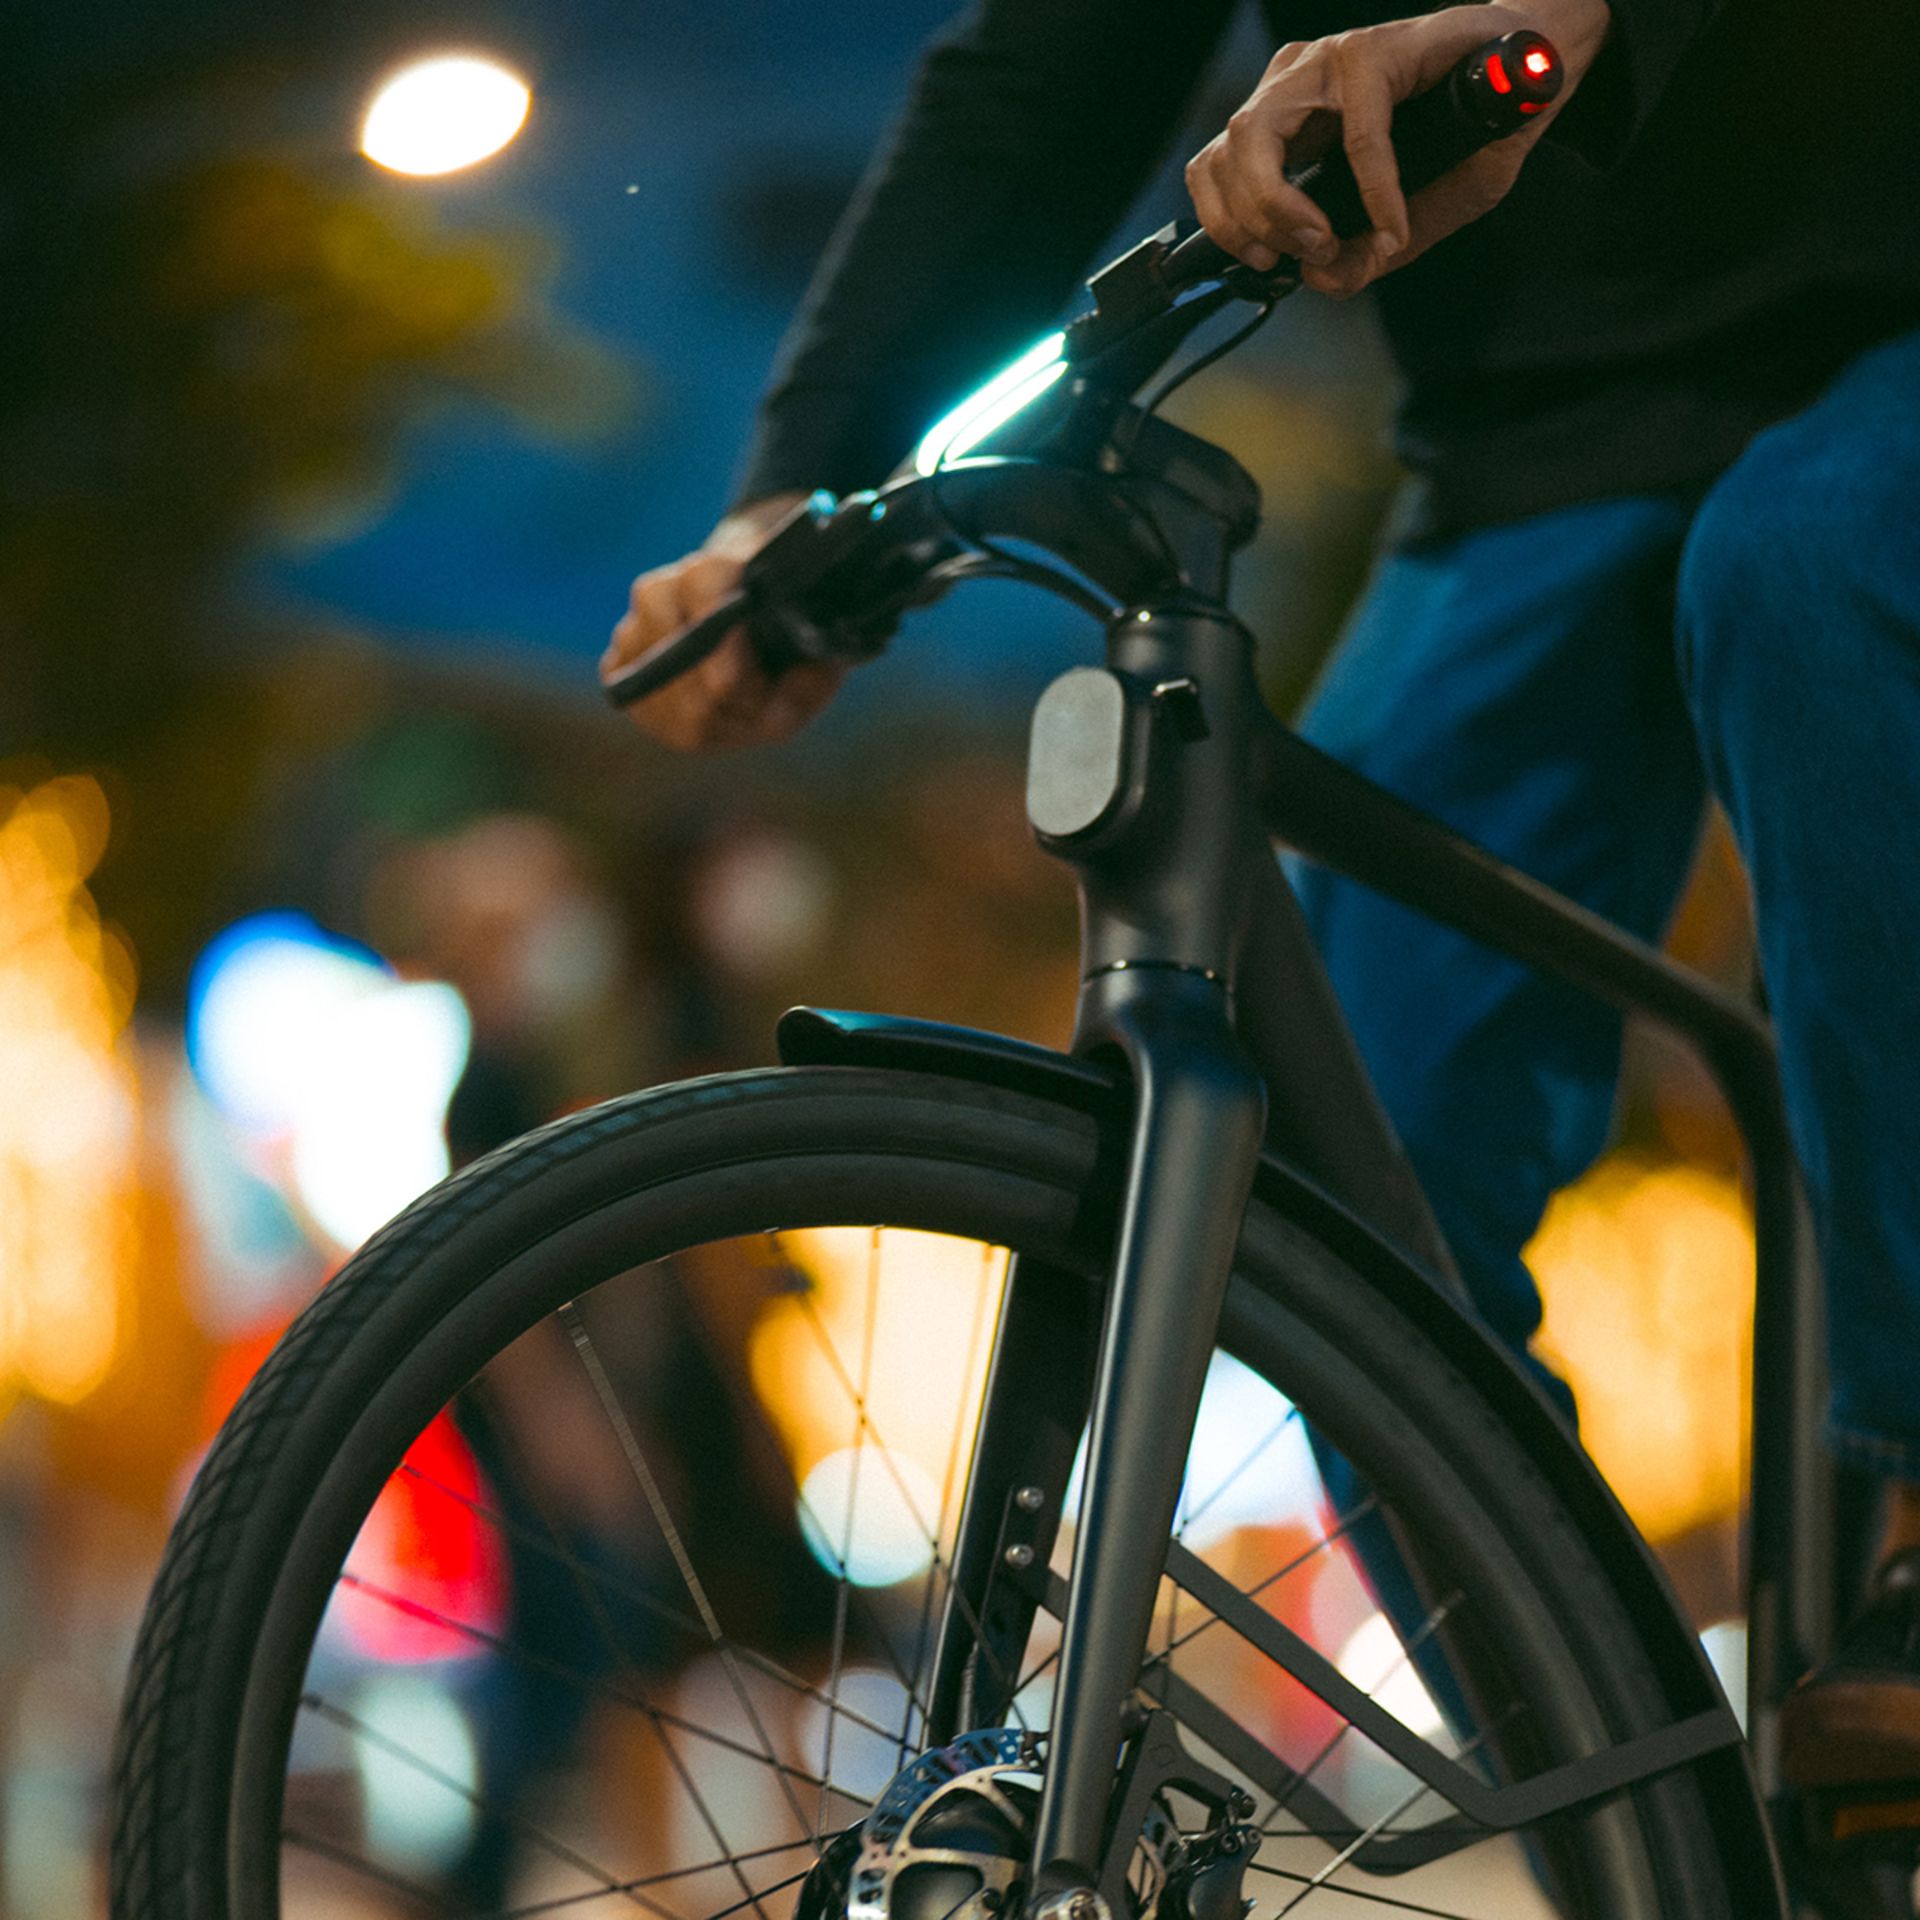 Modmo Saigon+ Electric Bicycle - RRP £2800 - Size M (Rider: 155-175cm) - Image 12 of 19